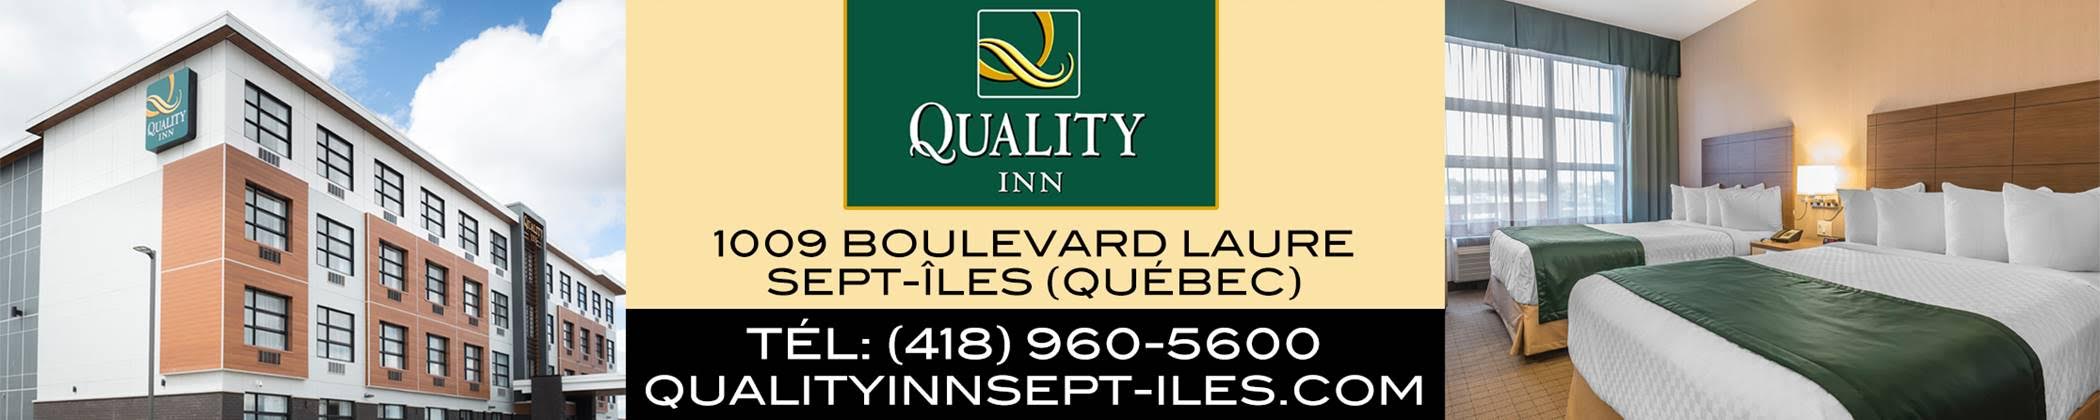 Quality Inn Sept-Îles